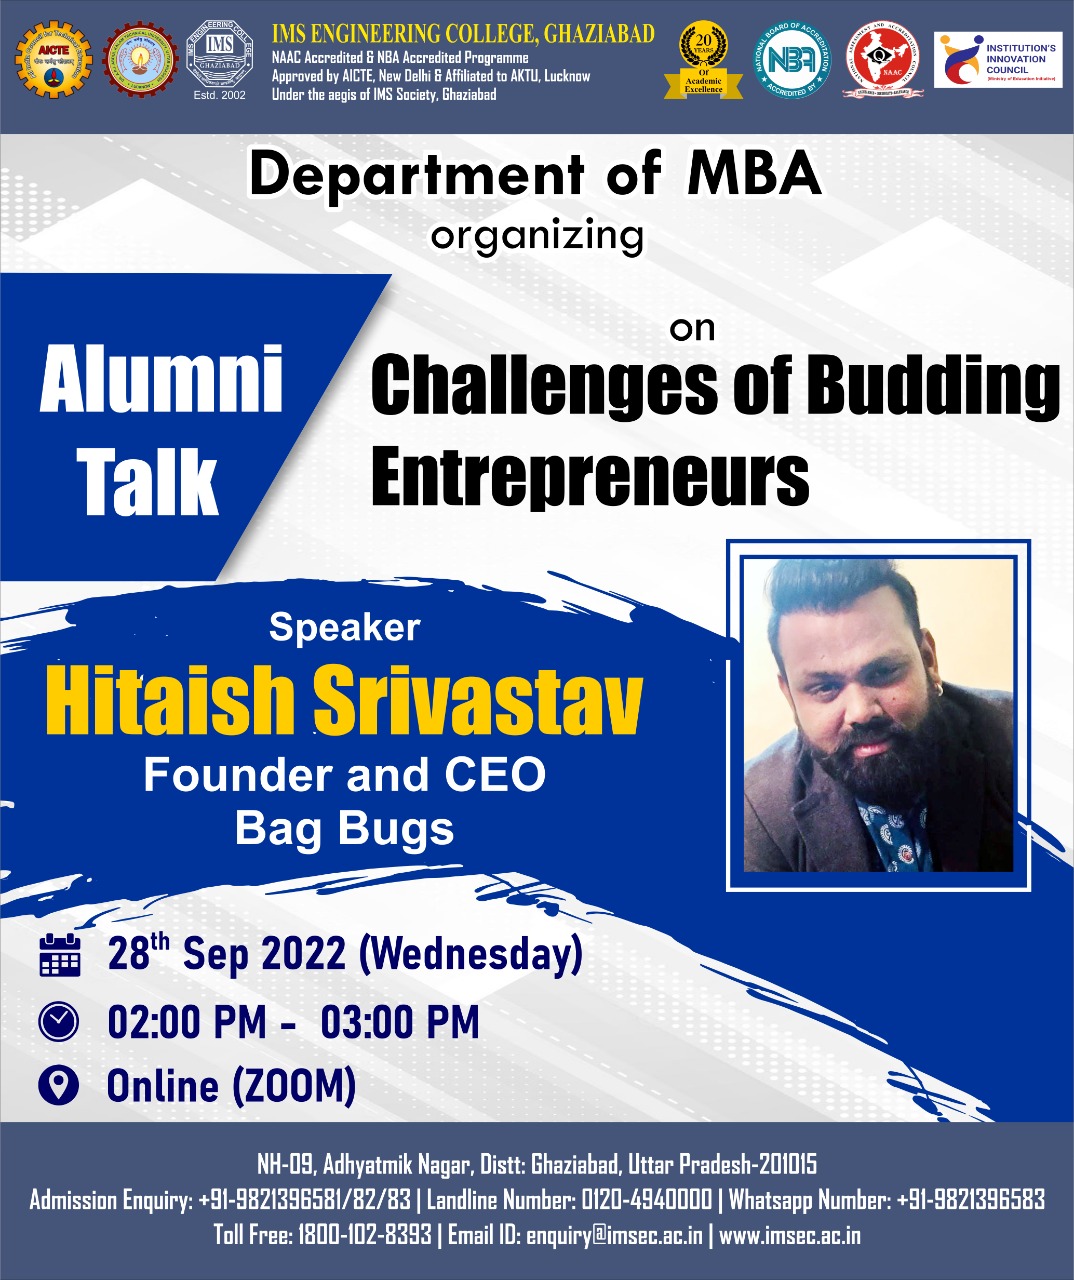 Alumni talk on Challenges of Budding Entrepreneurs